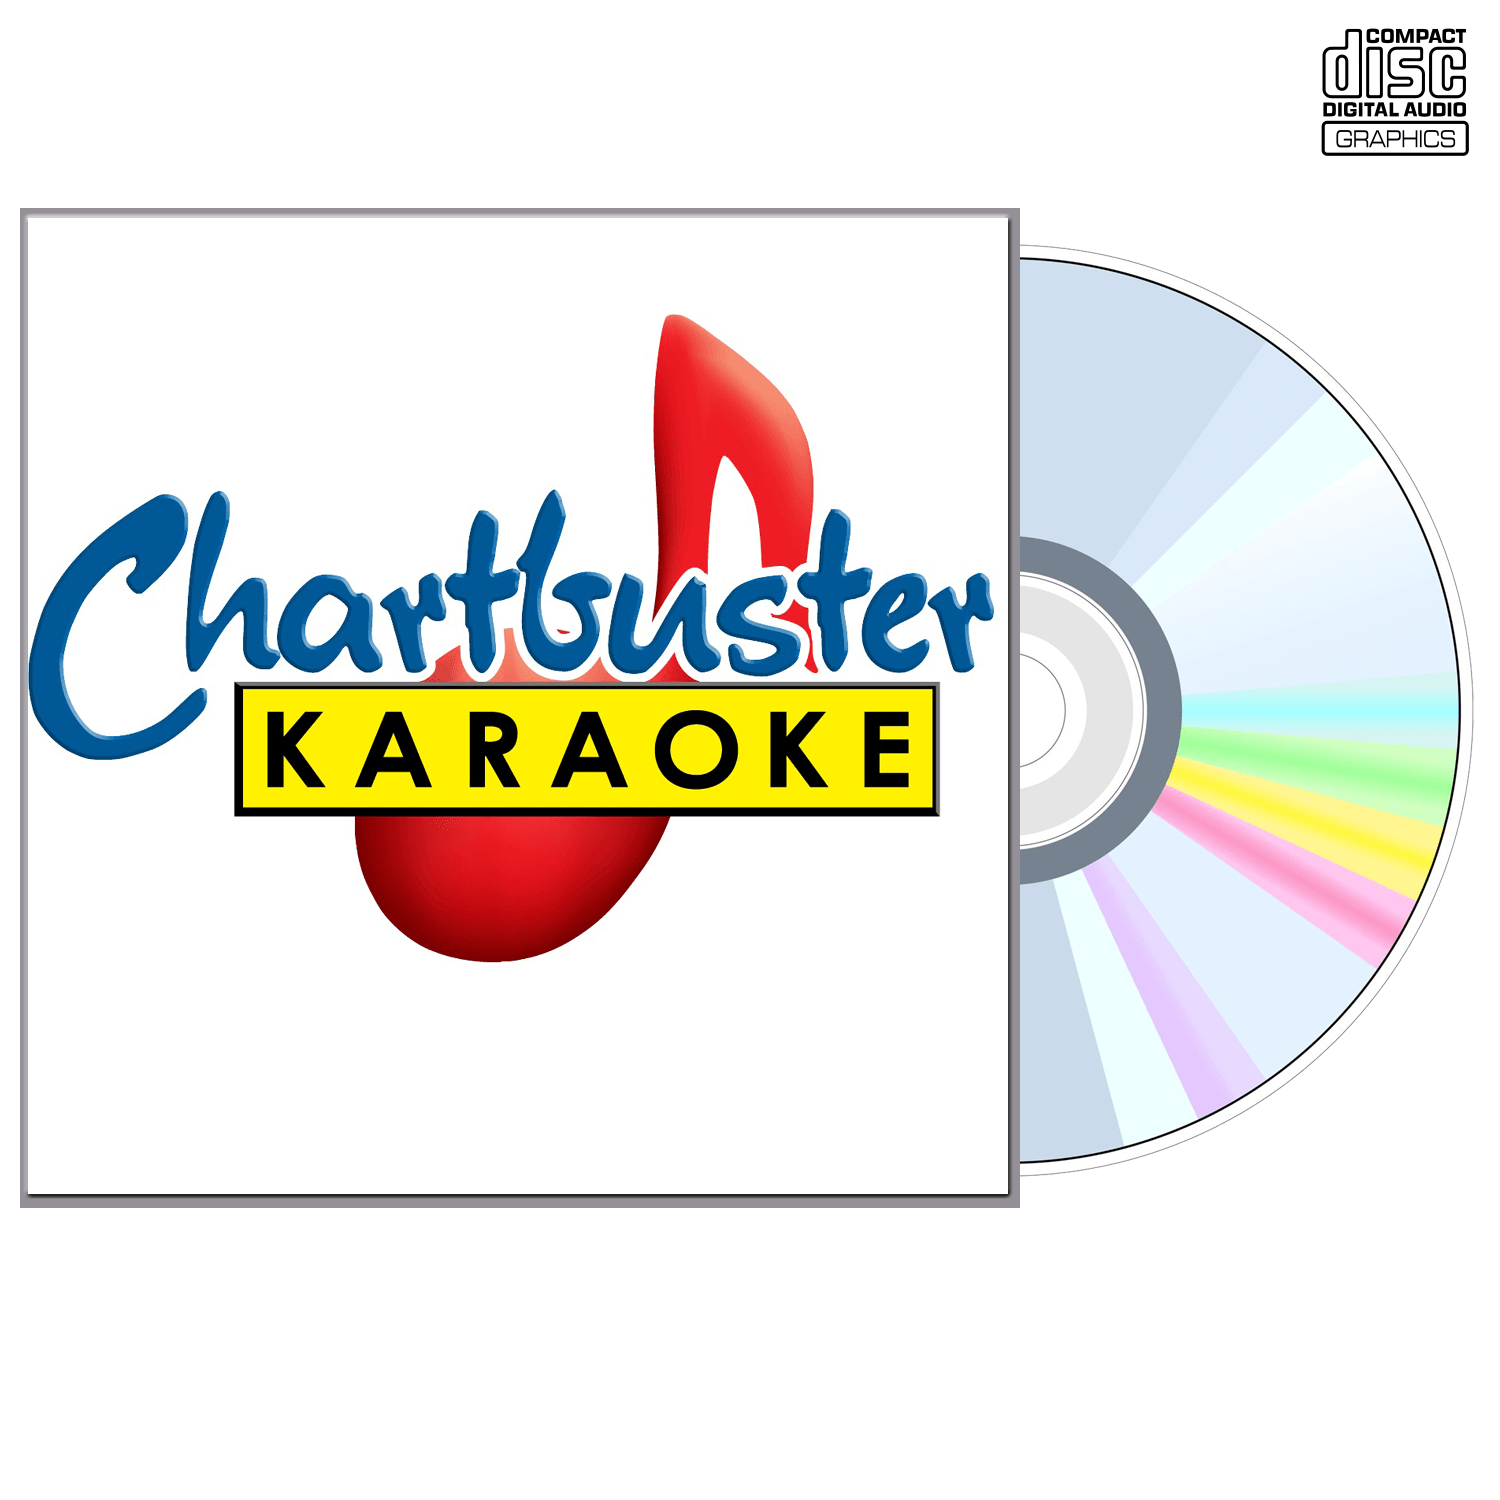 Ultimate Rock N Roll 3 Disc - CD+G - Chartbuster Karaoke - Karaoke Home Entertainment